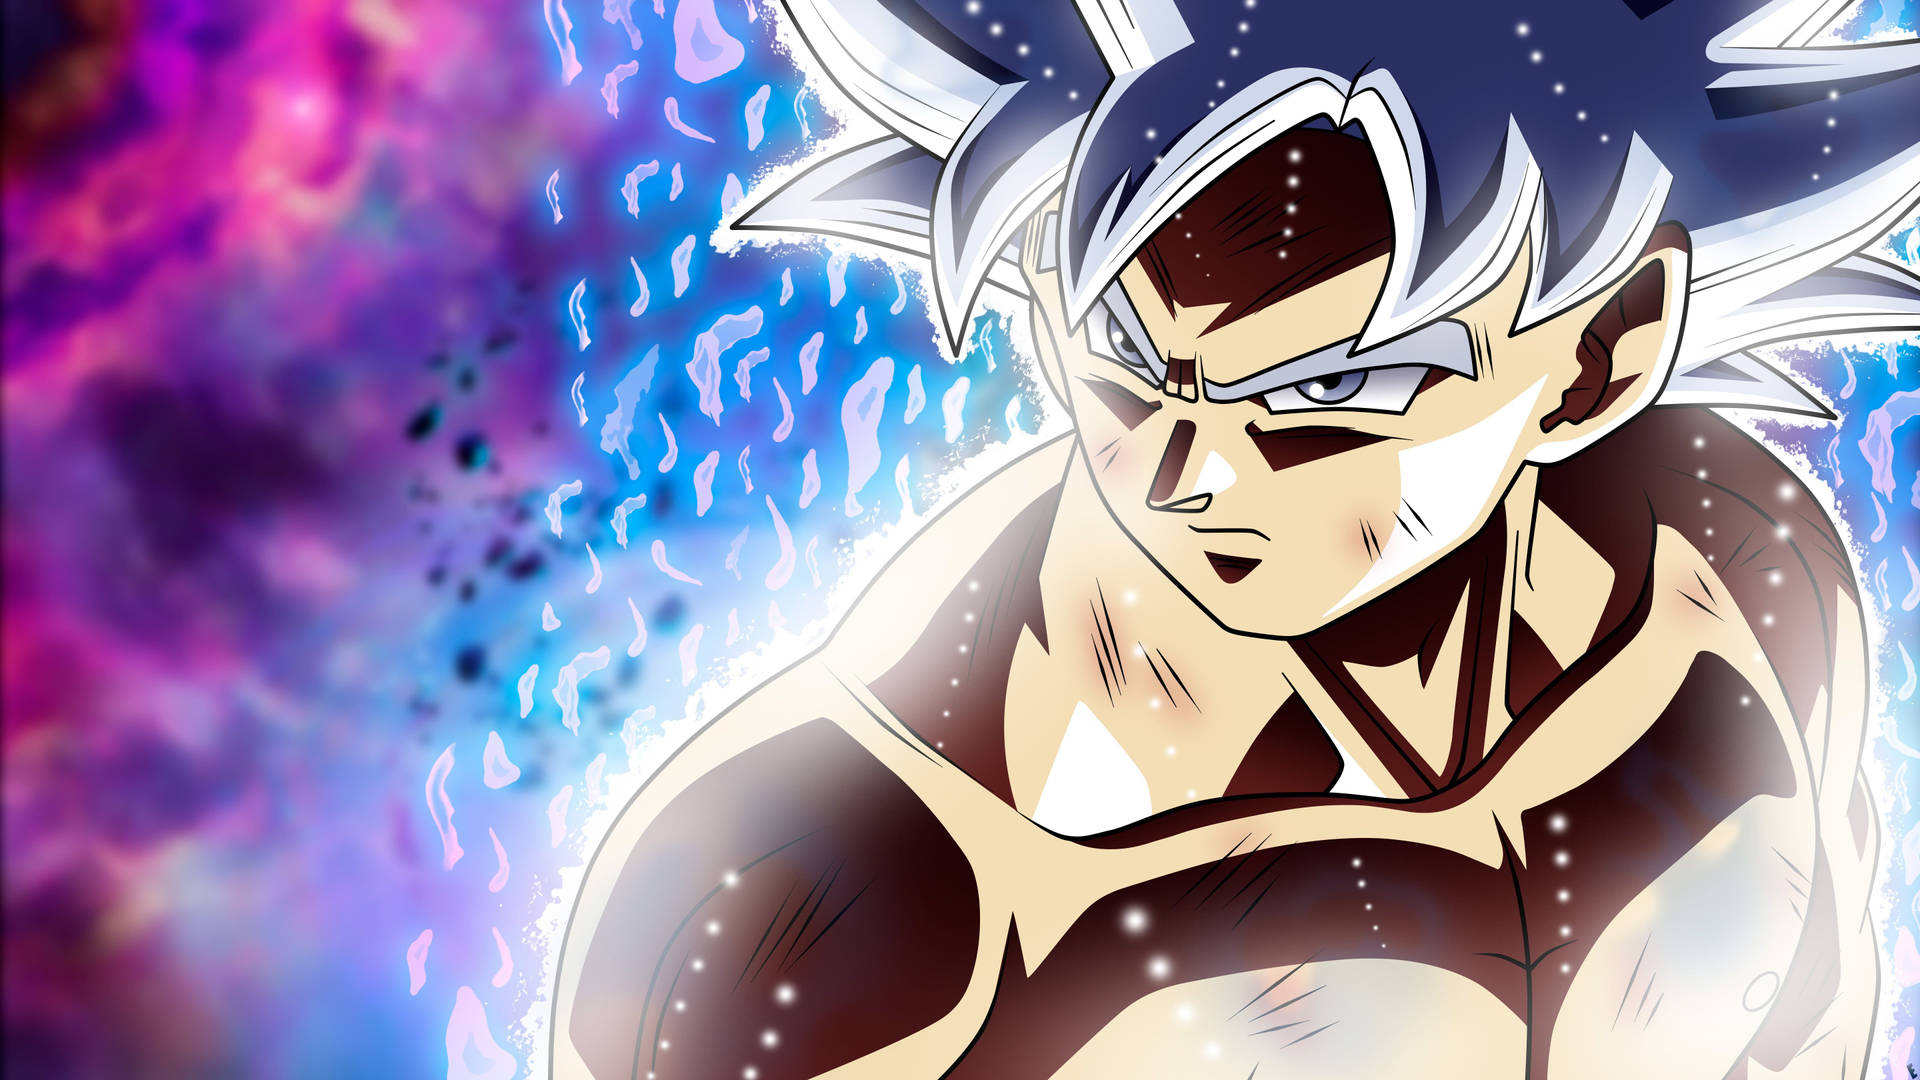 Free Goku Ultra Instinct Wallpaper Downloads, [100+] Goku Ultra Instinct  Wallpapers for FREE 